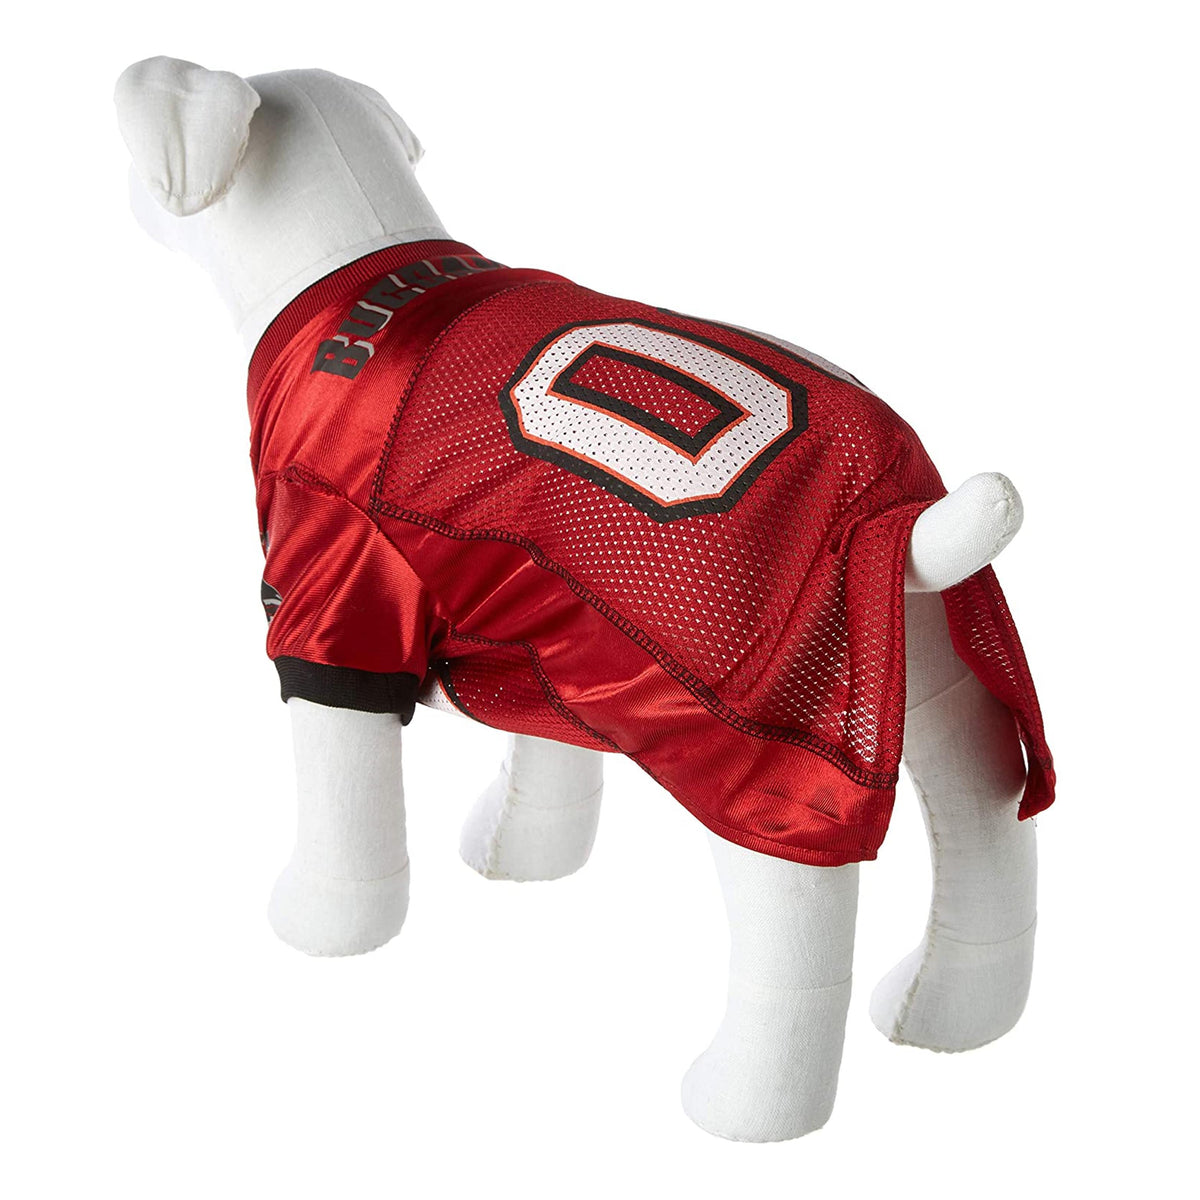  NFL Minnesota Vikings Dog Jersey, Size: Medium. Best Football  Jersey Costume for Dogs & Cats. Licensed Jersey Shirt. : Sports Fan Jerseys  : Sports & Outdoors